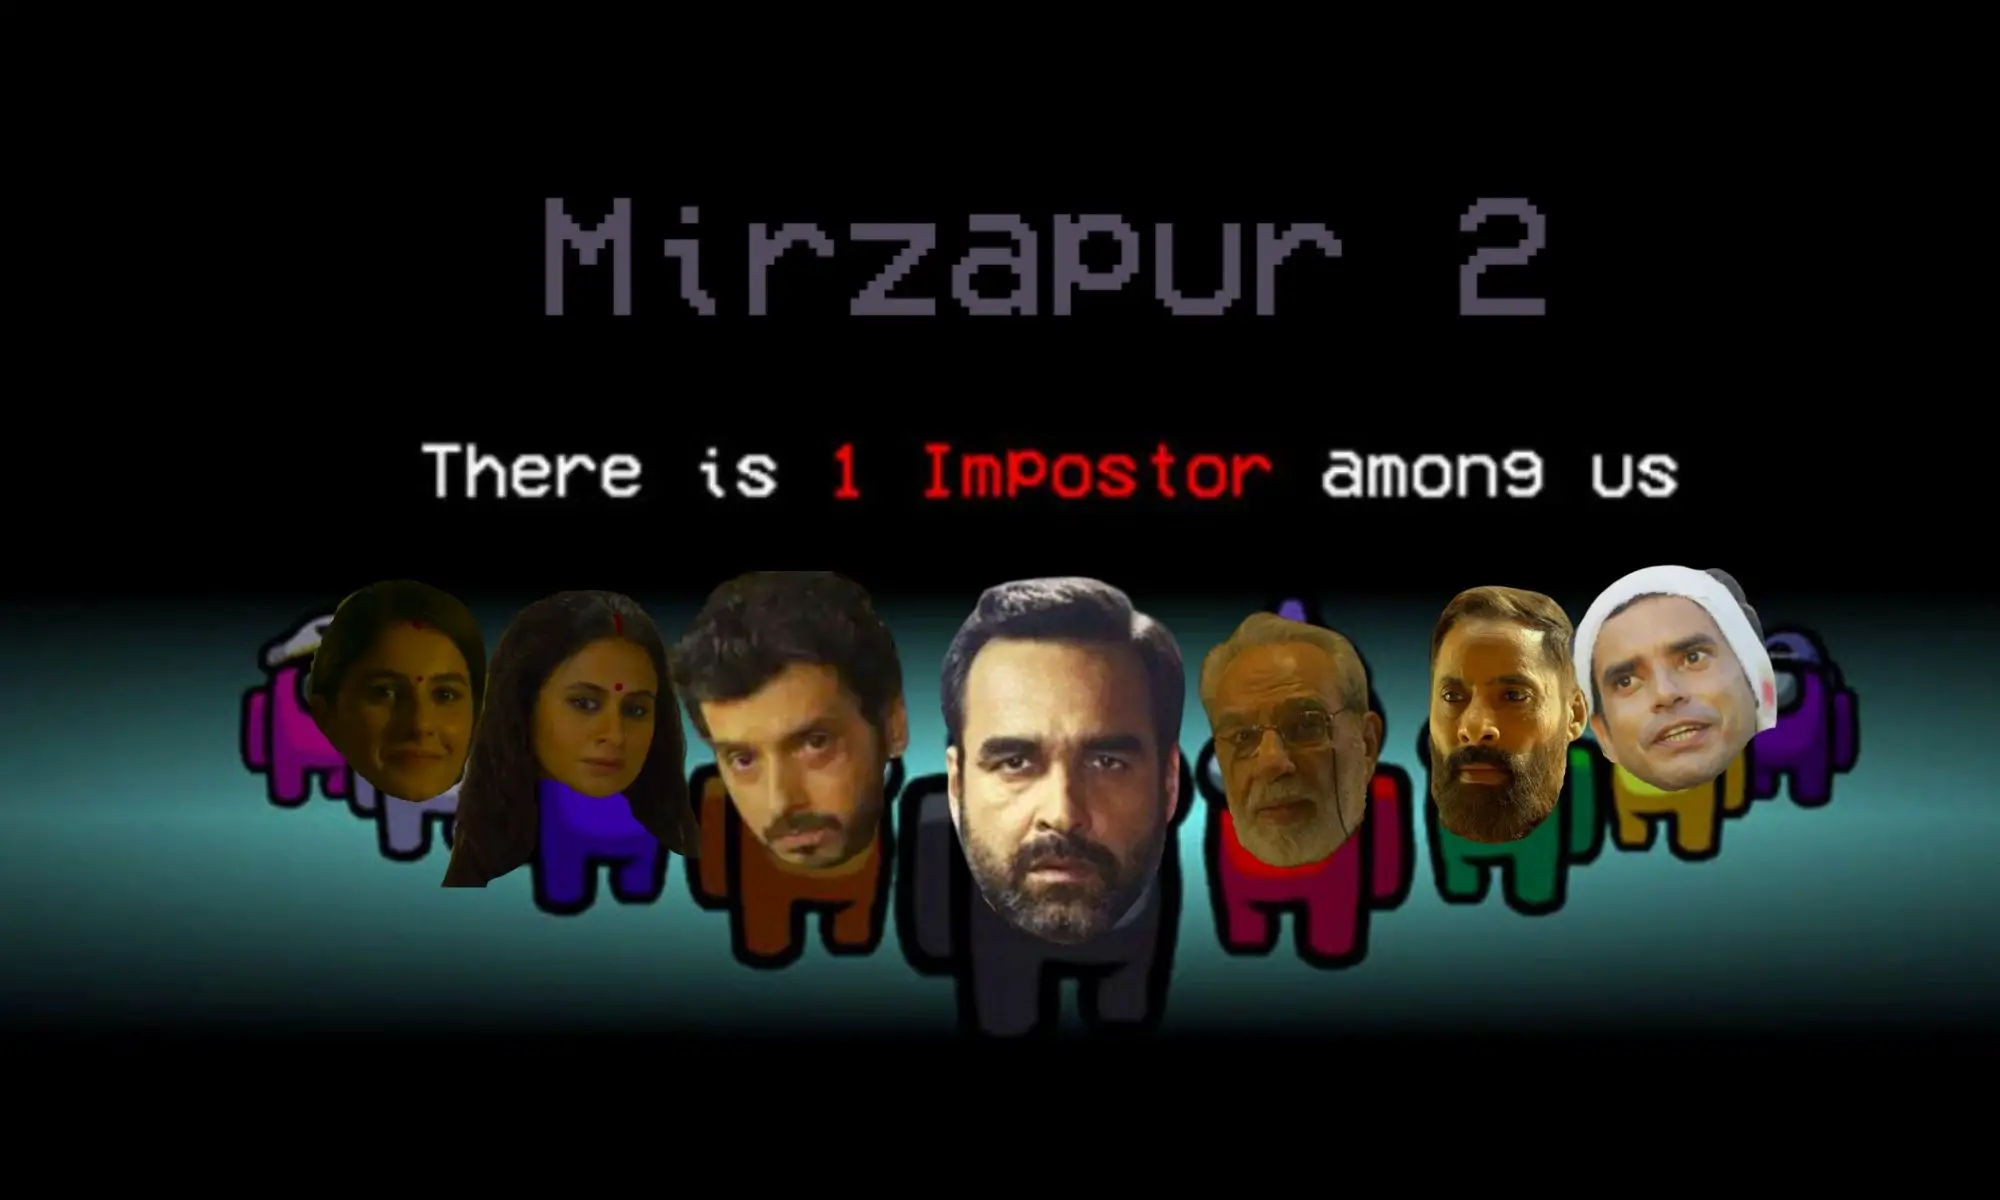 Among us meme on Mirzapur 2